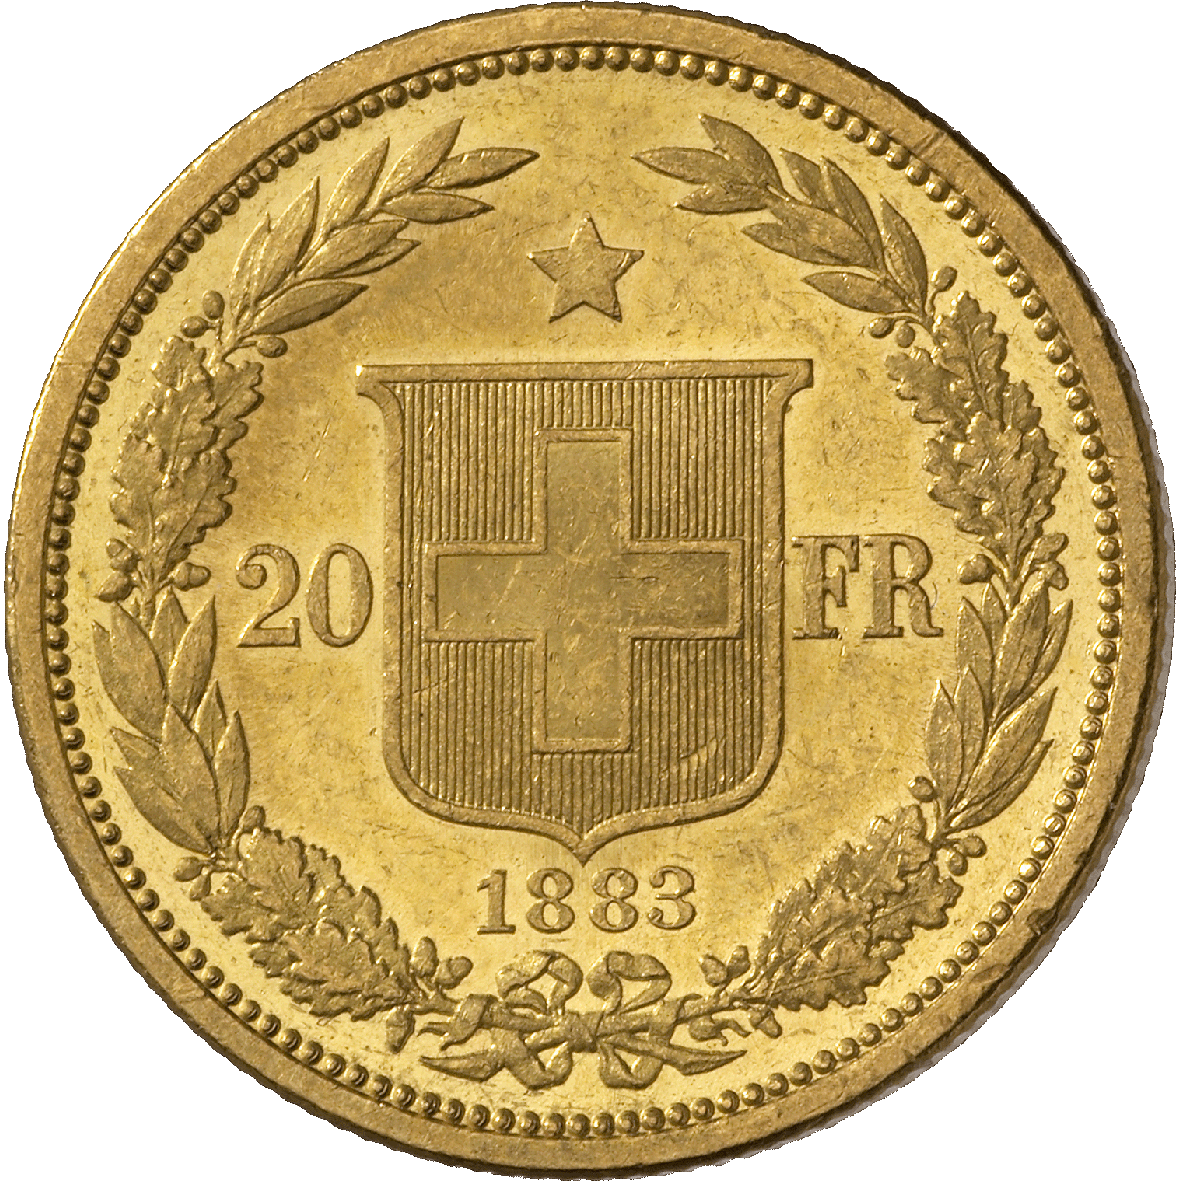 Schweizerische Eidgenossenschaft, 20 Franken 1883 (reverse)